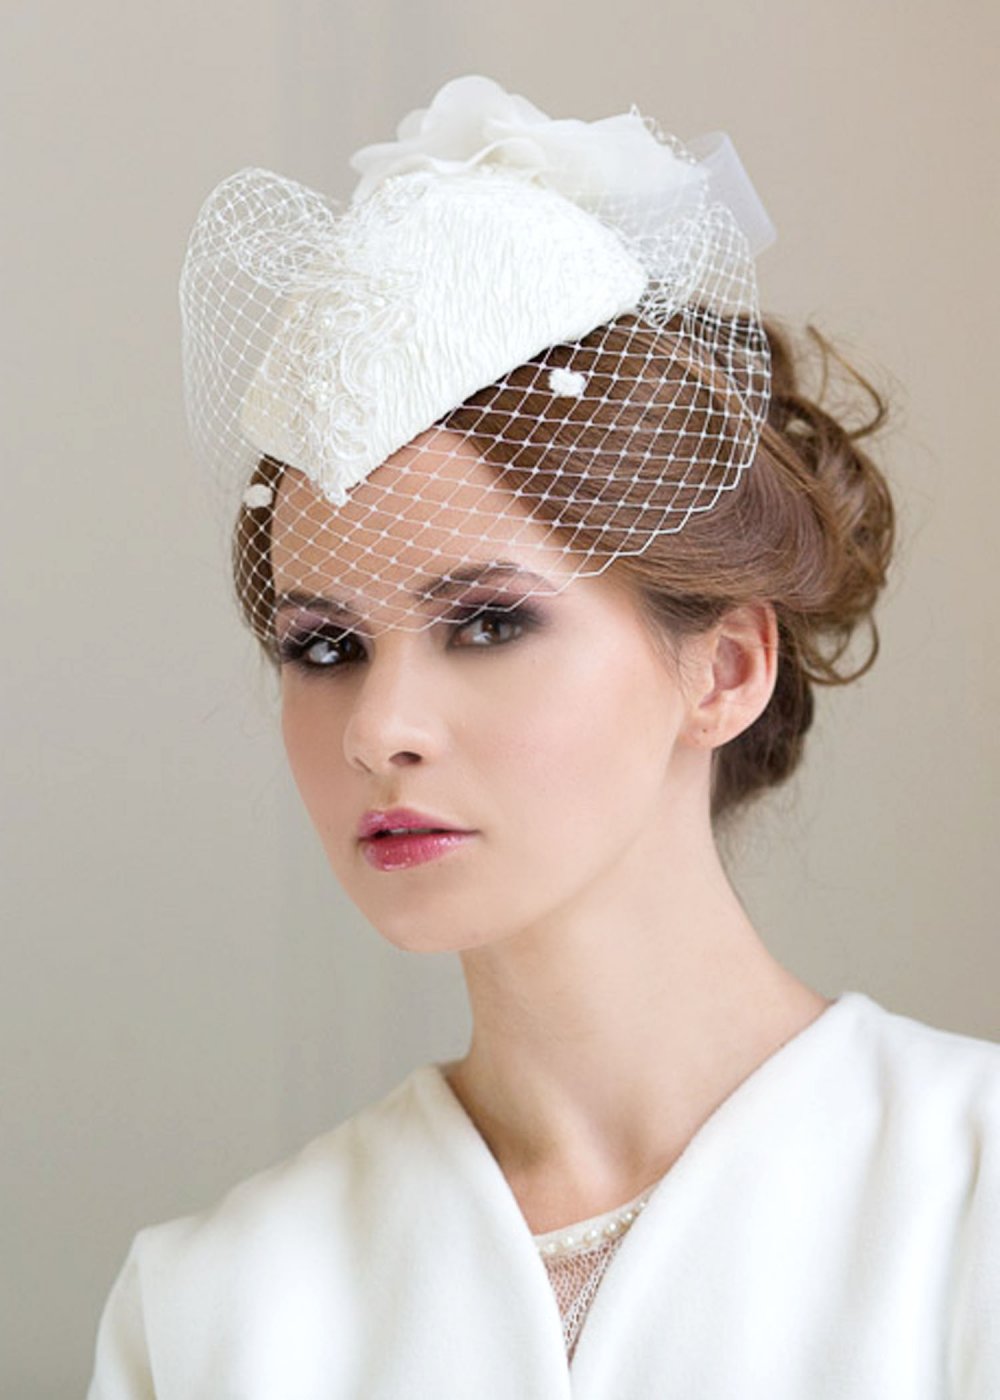 Шляпка-пилотка
http://www.fashion-piart.ru/catalog/Vualetki_aksessuary_dlya_volos_svadebnye/